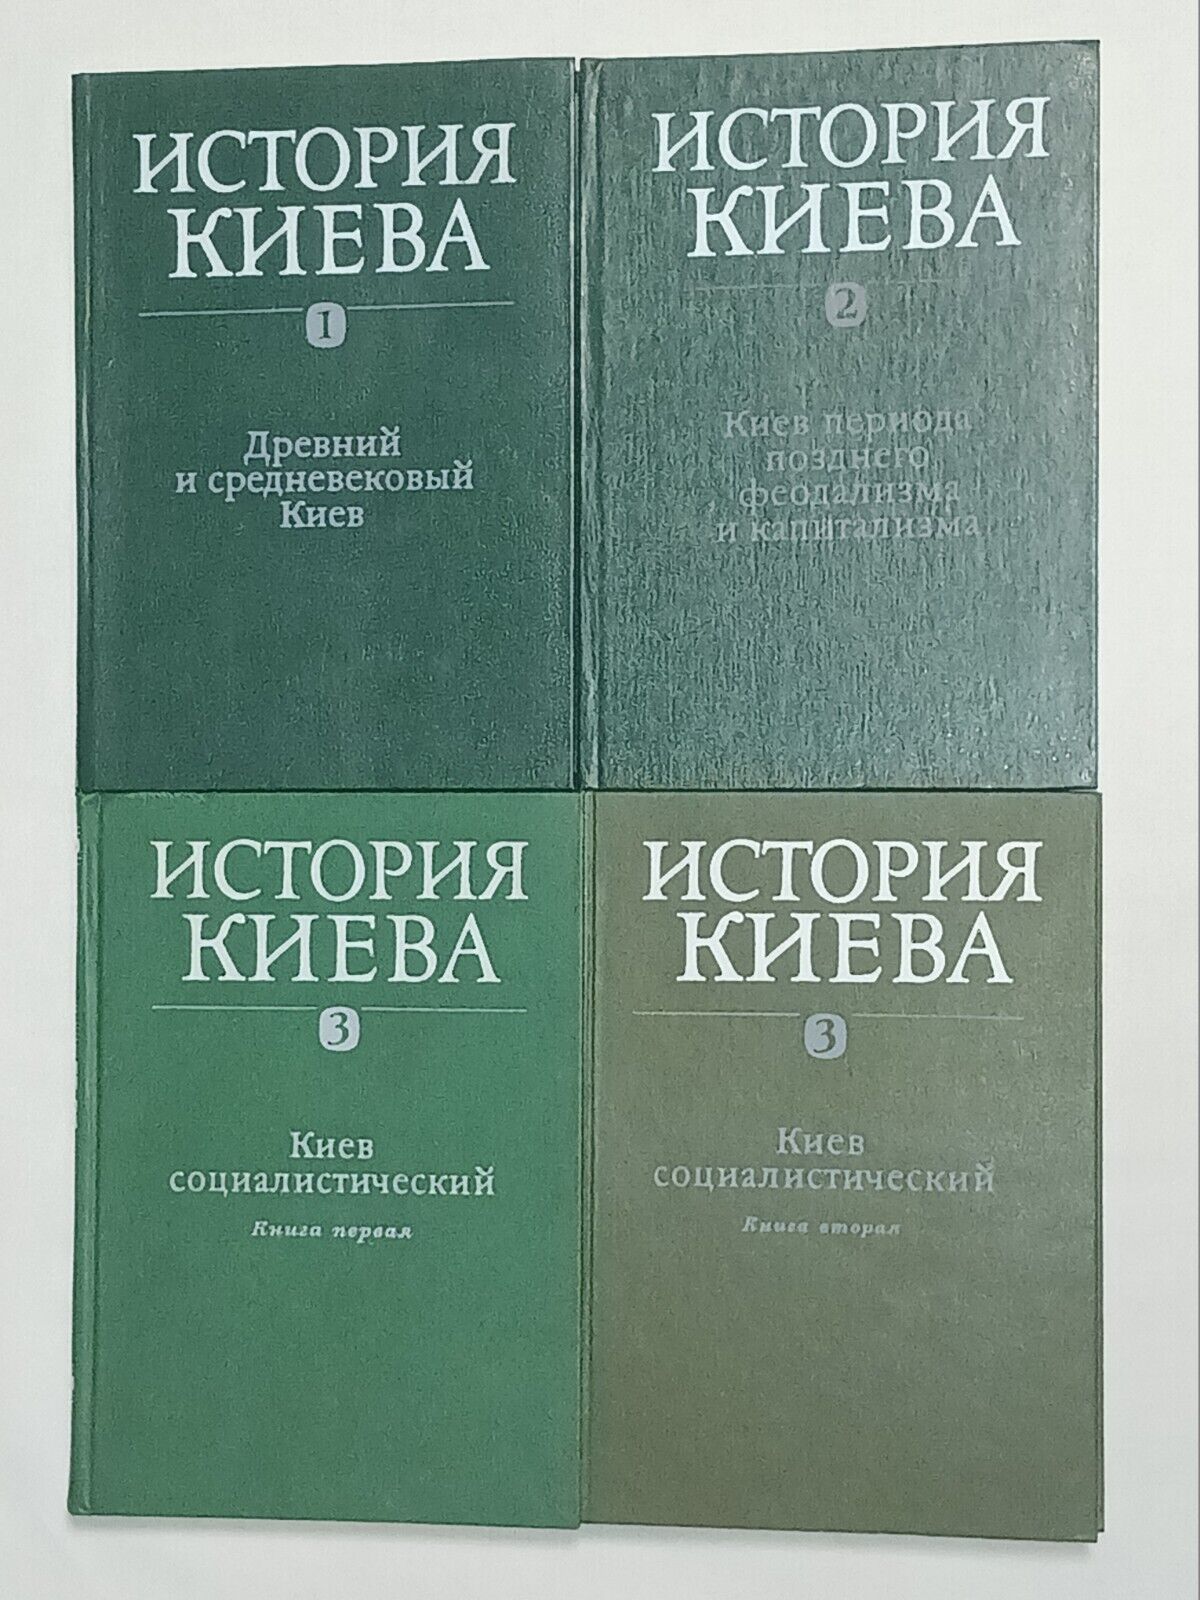 1984 - 1986 History of Kyiv. Full set. Vintage Soviet book USSR in Russian